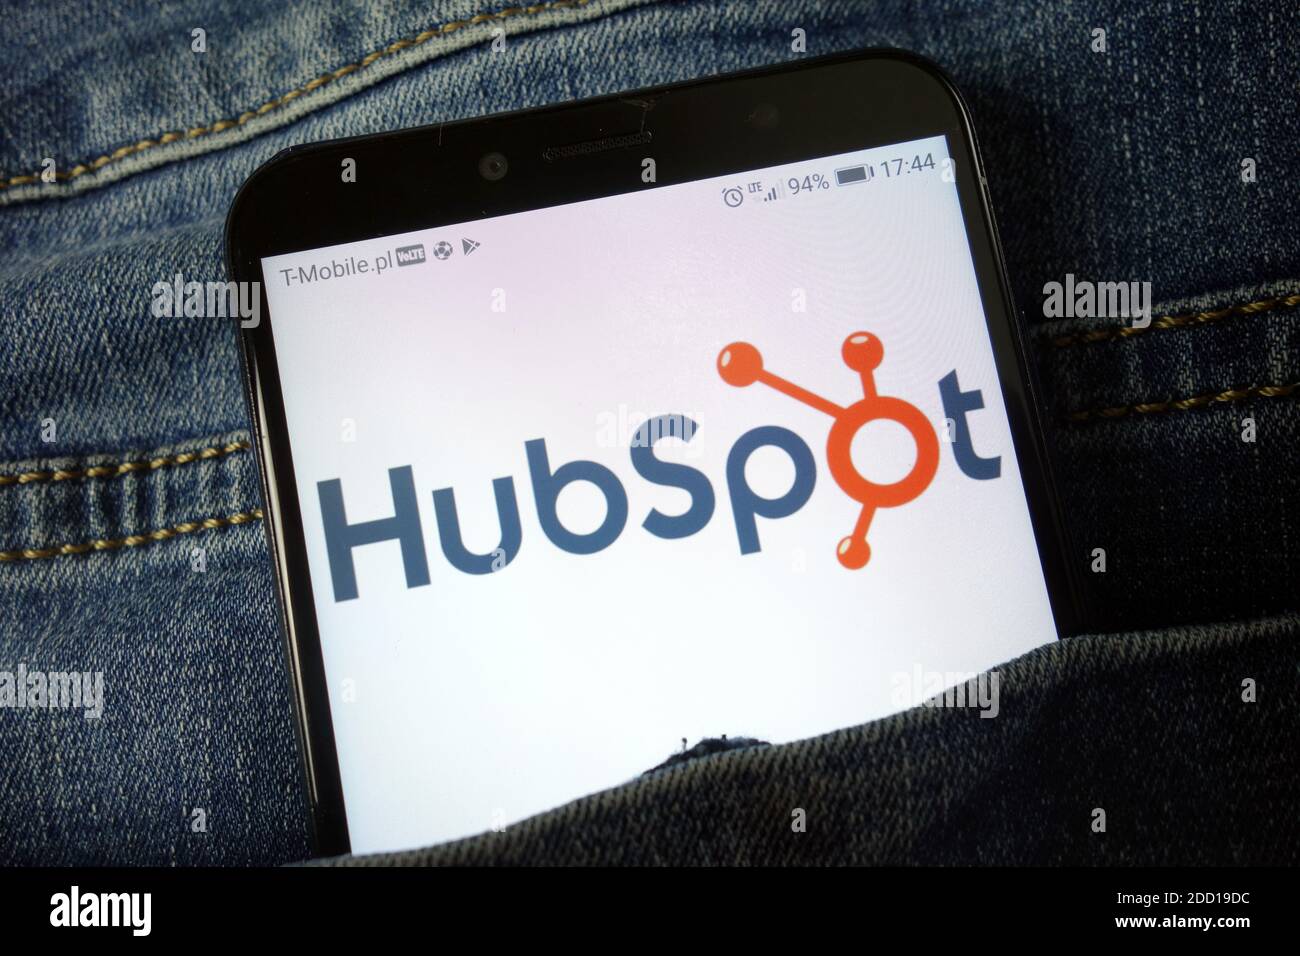 KONSKIE, POLAND - November 24, 2019: HubSpot Inc logo displayed on mobile phone Stock Photo